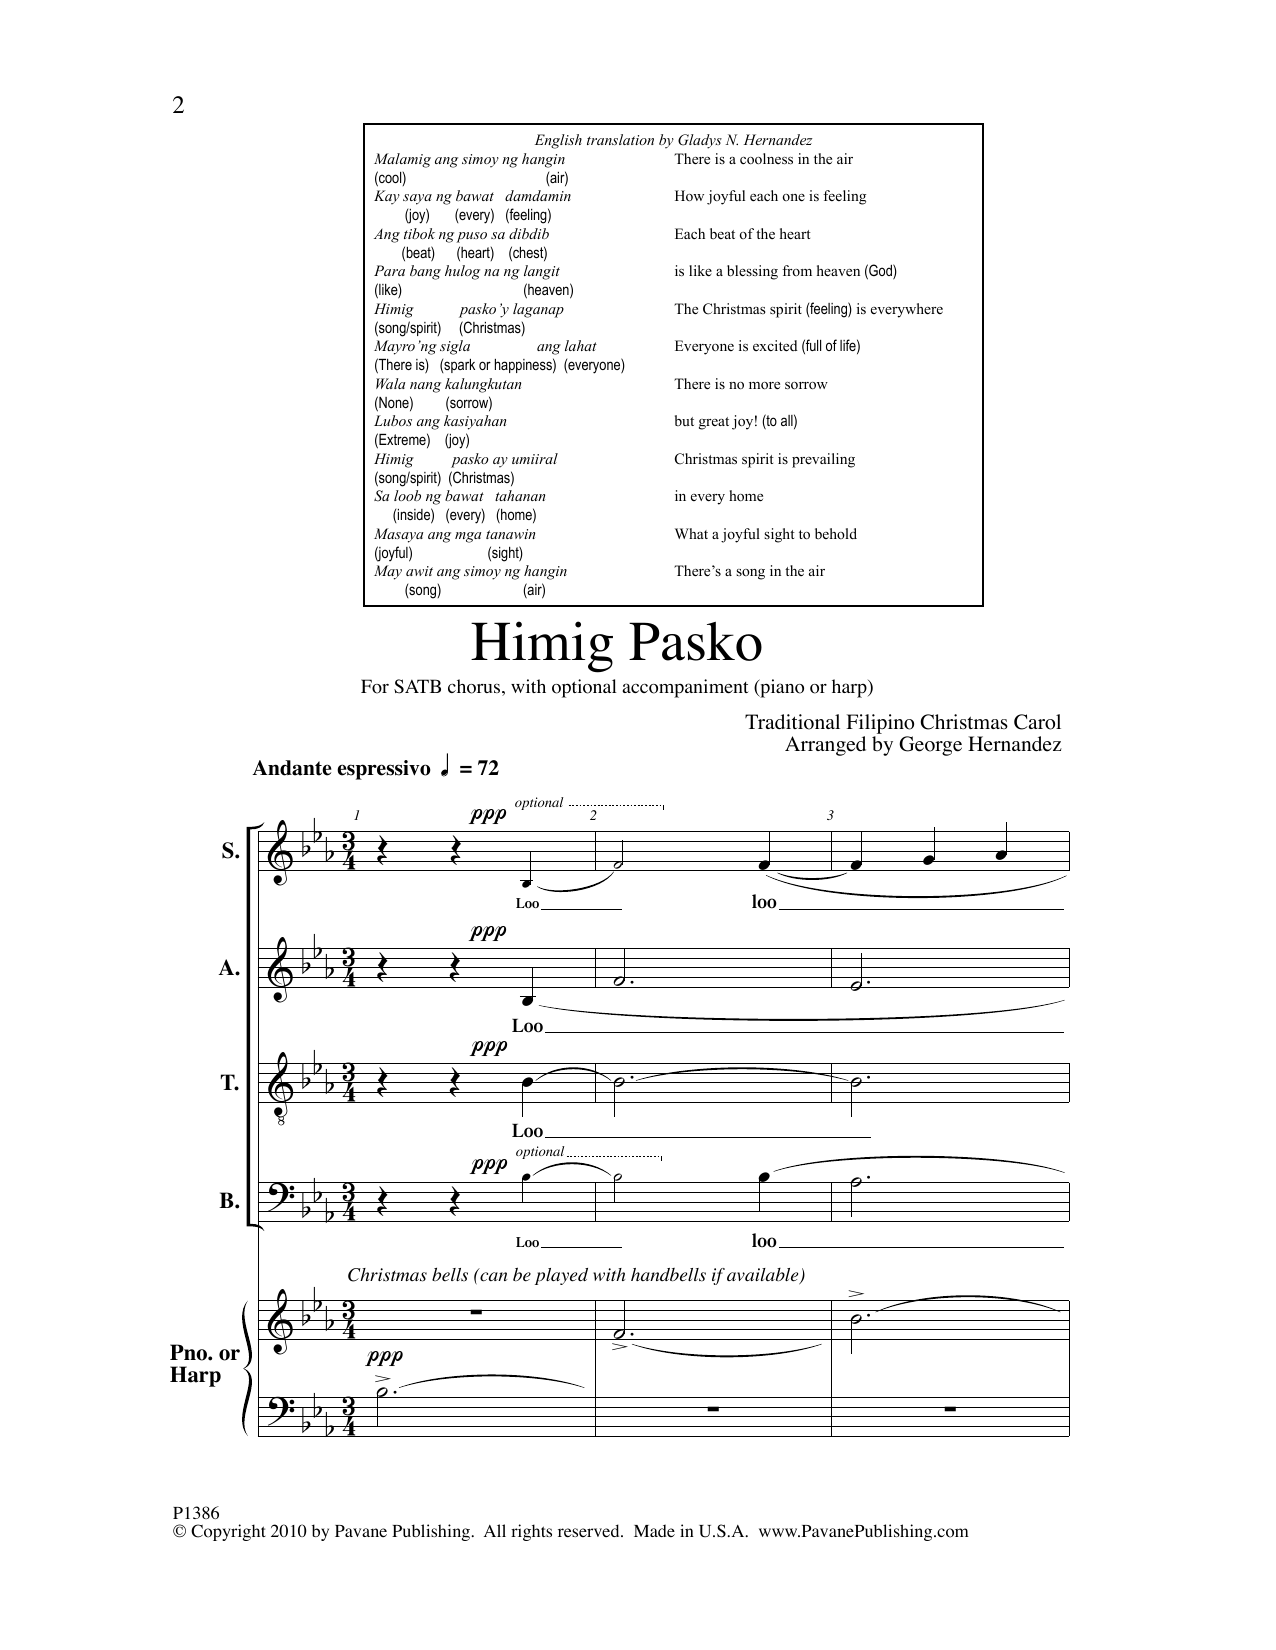 Traditional Filipino Christmas Carol Himig Pasko (arr. George Hernandez) Sheet Music Notes & Chords for SATB Choir - Download or Print PDF